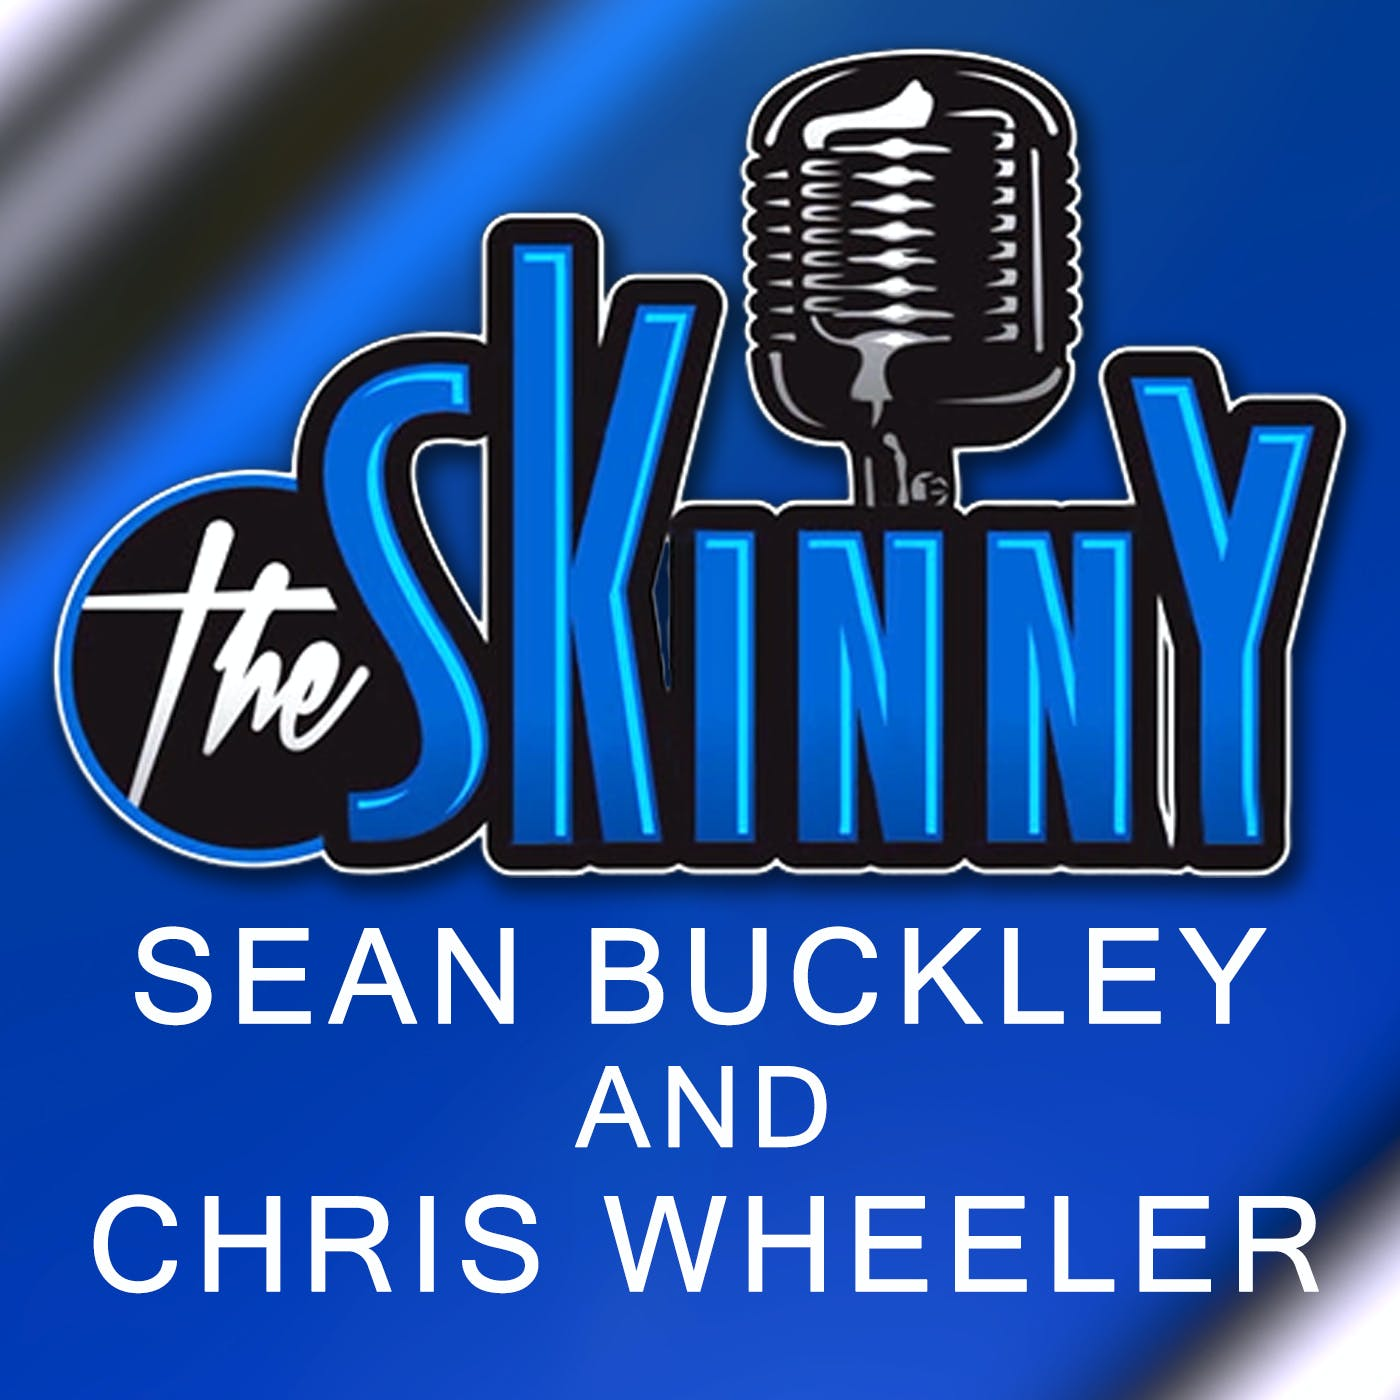 #10 - Chris Wheeler Part 2 with Sean Buckley